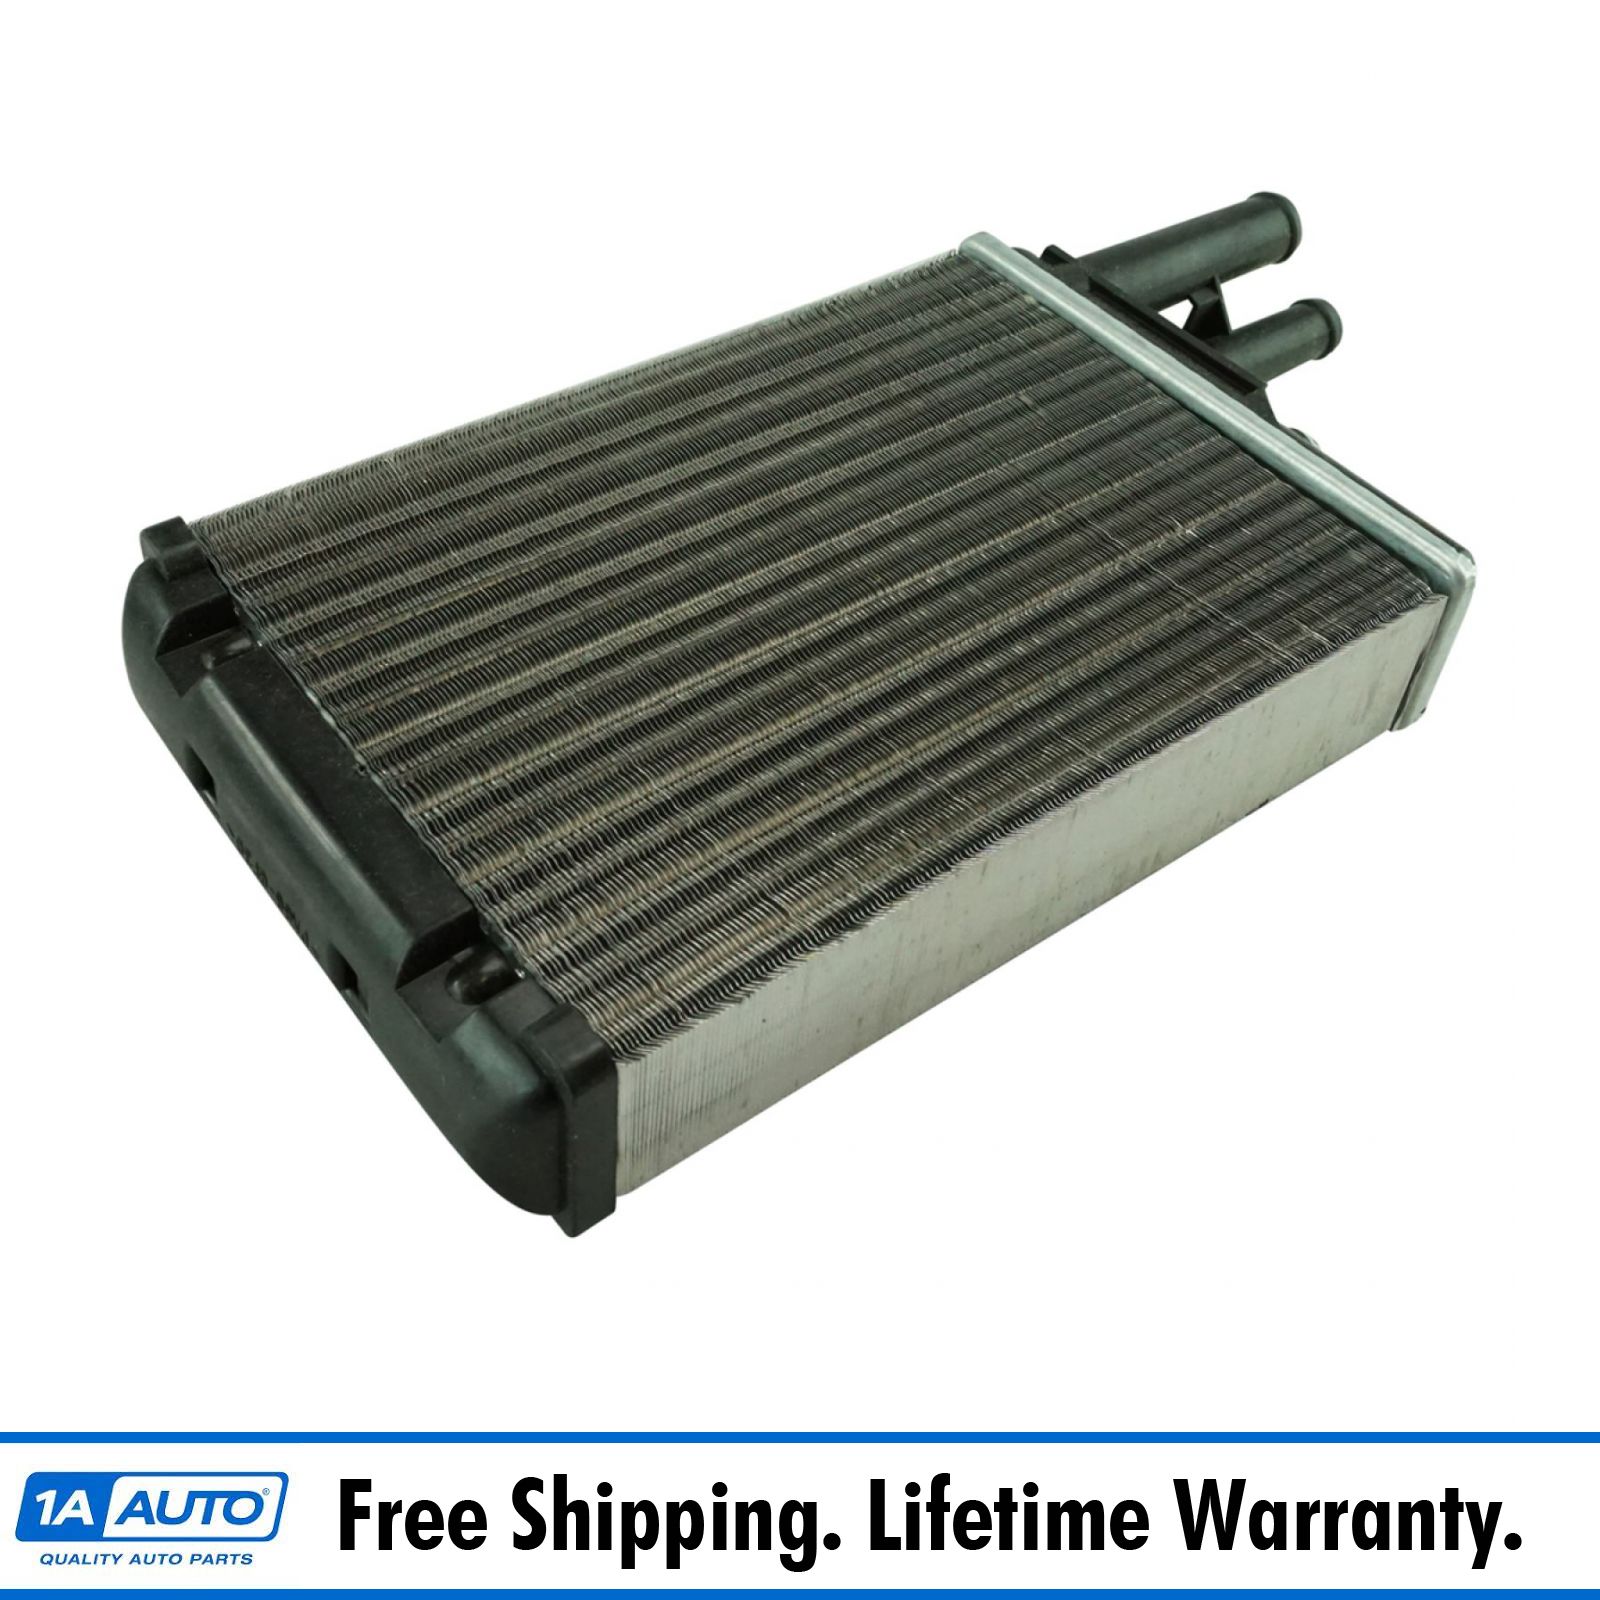 Heater Core for Chrysler Cirrus Sebring Dodge Stratus Plymouth Breeze eBay